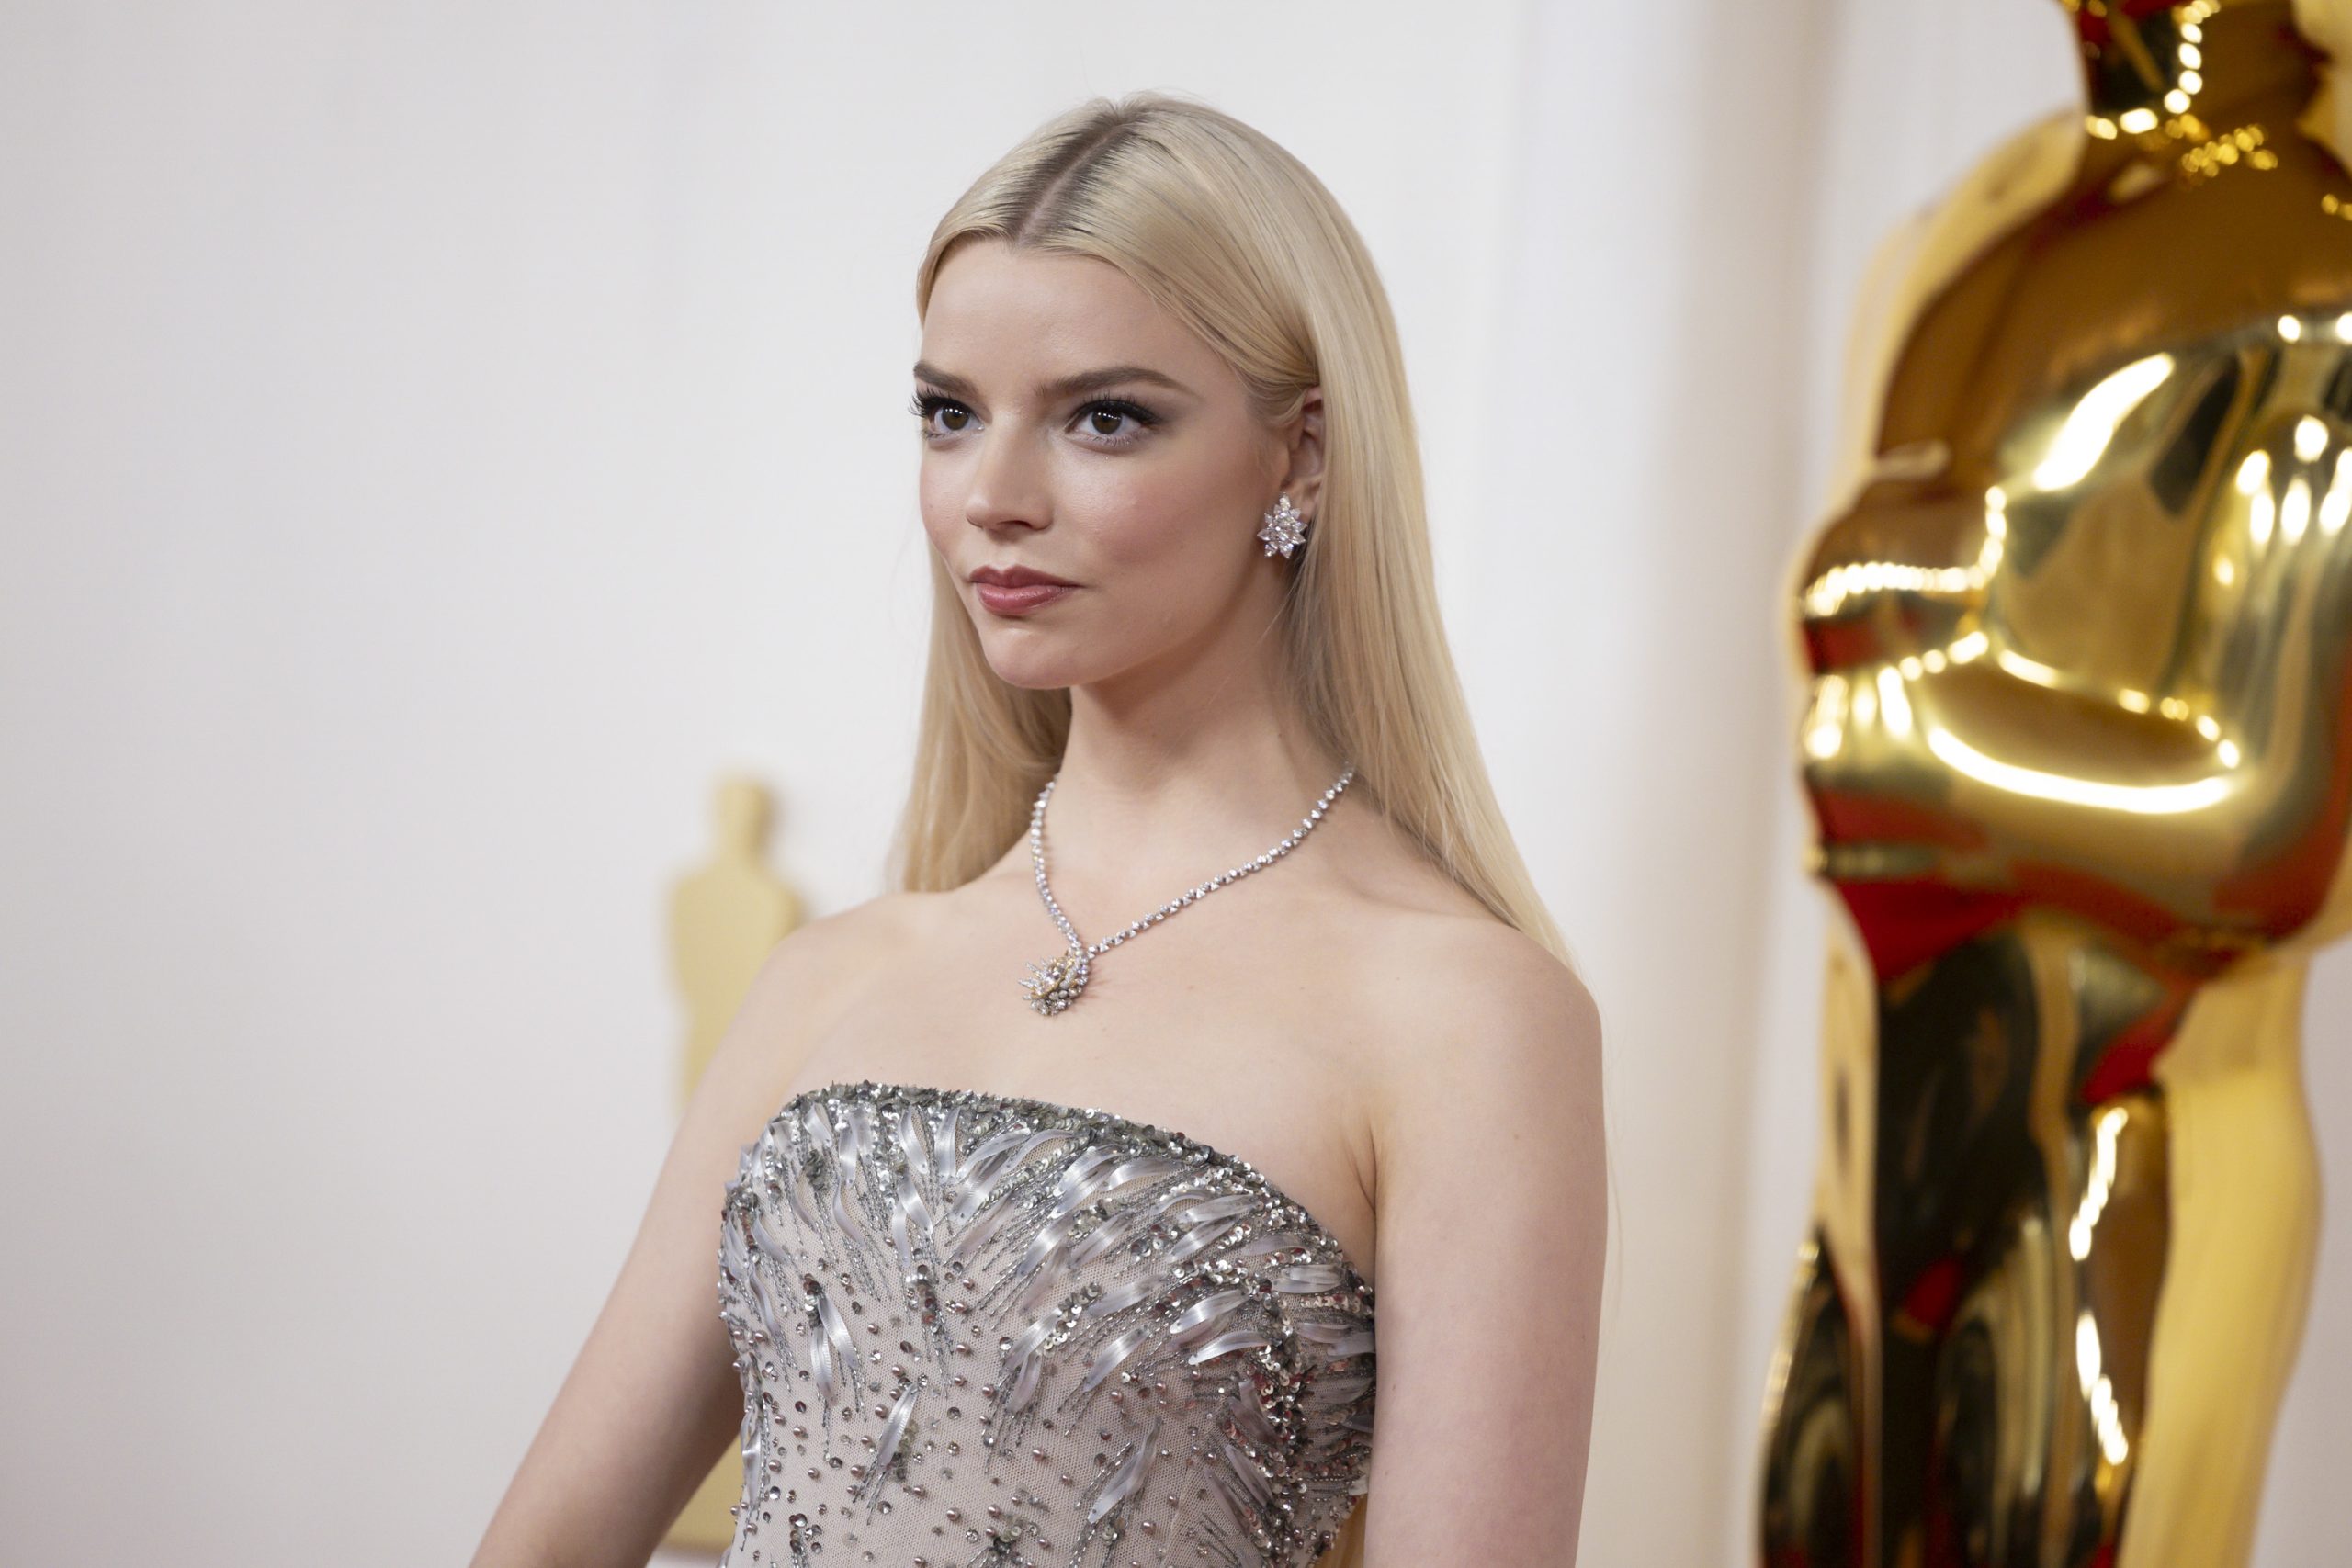 Anya TaylorJoy Looks Stunning On Red Carpet For Sunday's Oscars